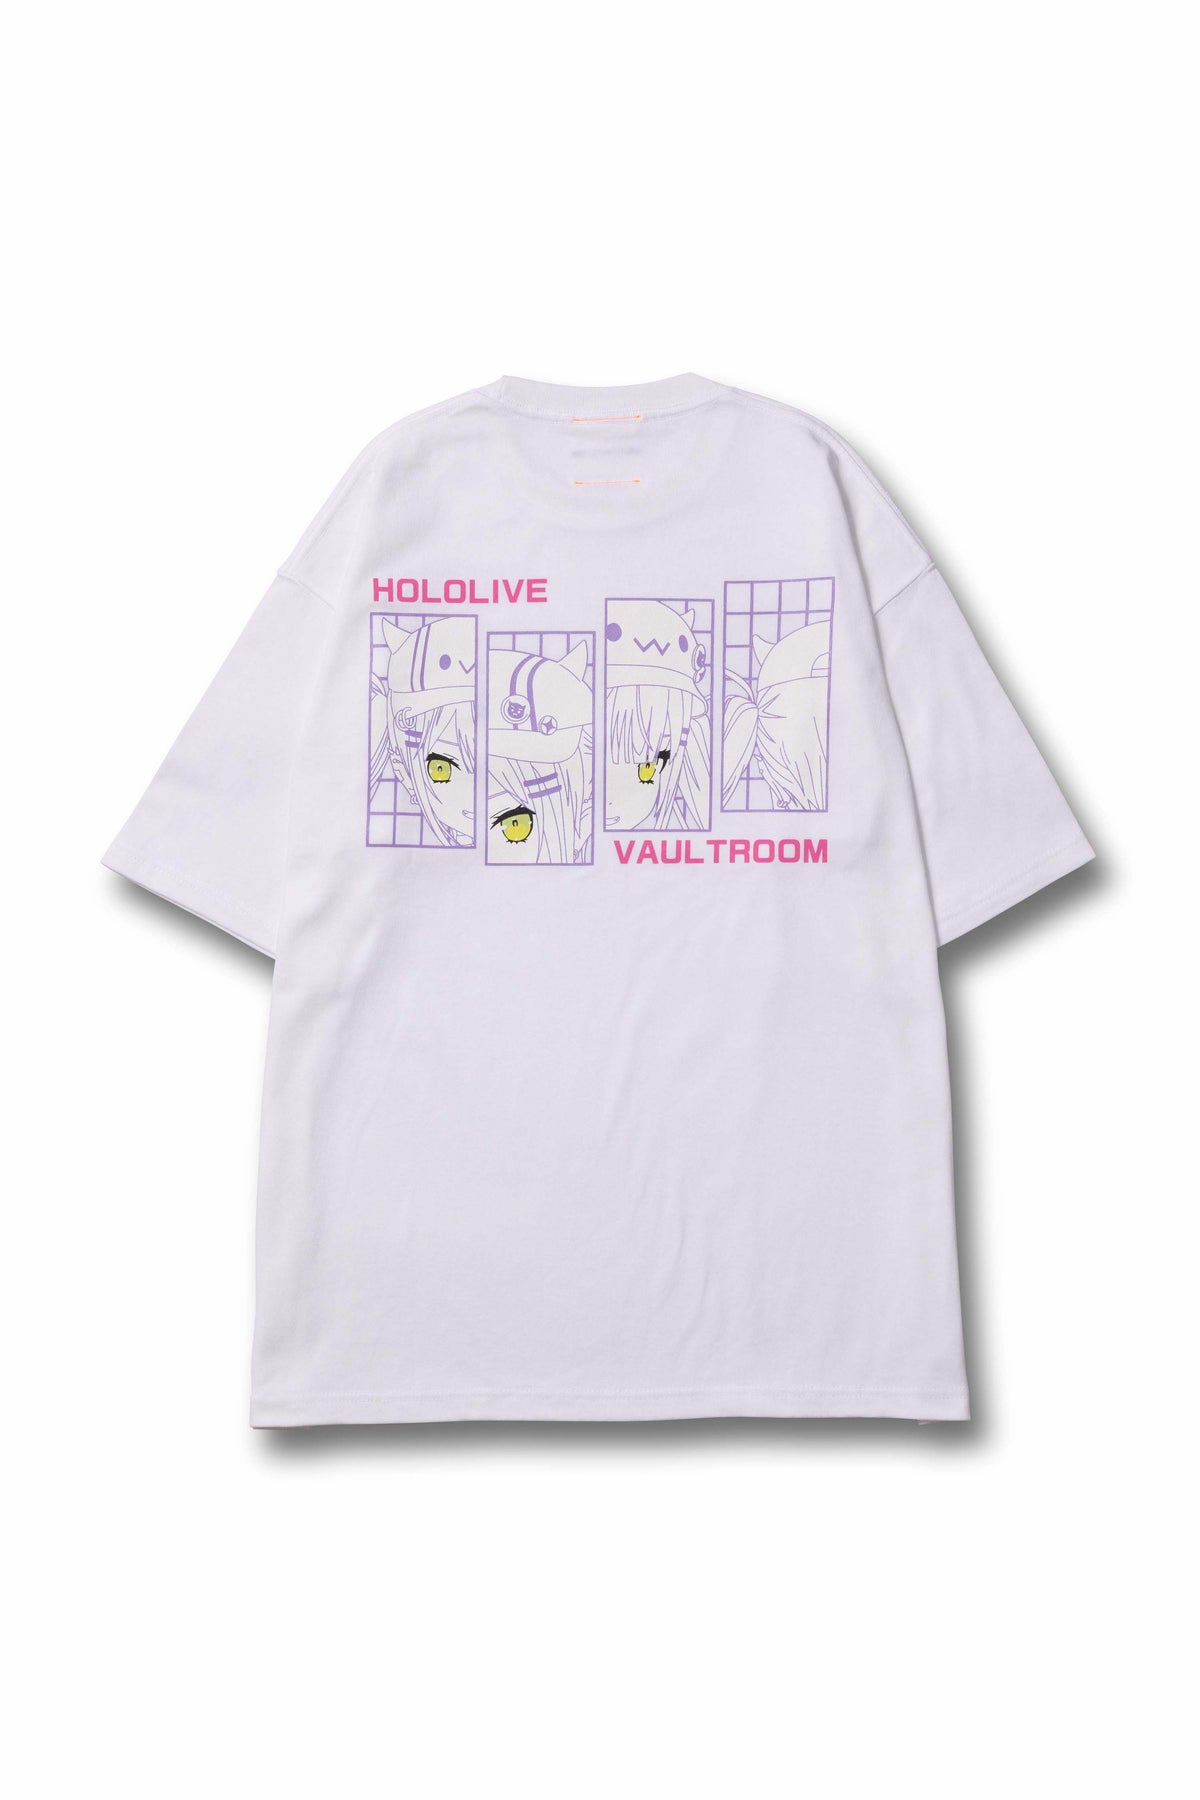 vaultroom VCR KEYREX HOODIE / BLK M size